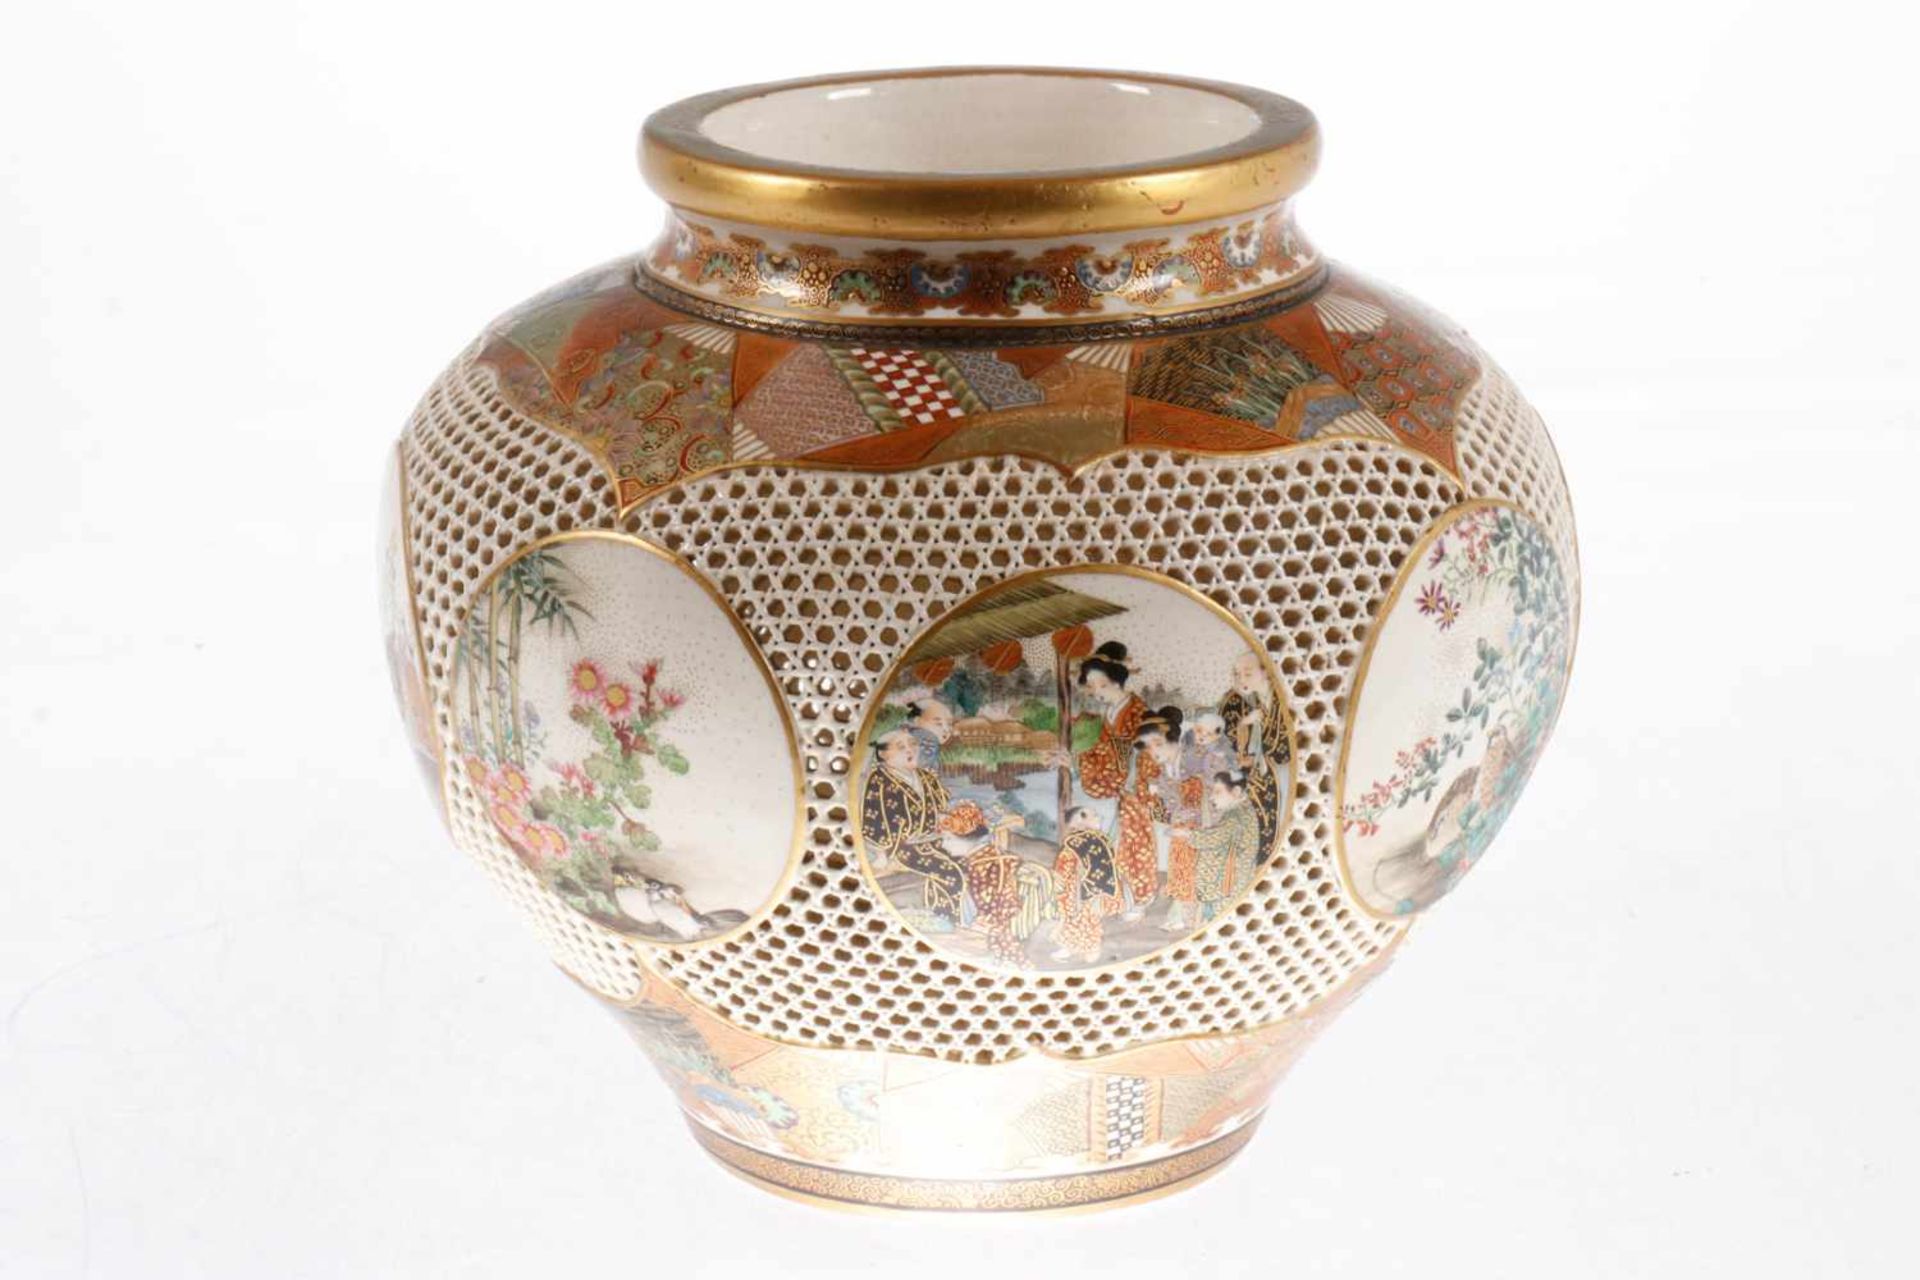 Japanische Vase, Keramik, durchbrochene Wandung, feine Miniaturbemalung mit Genre-Szenen, auf